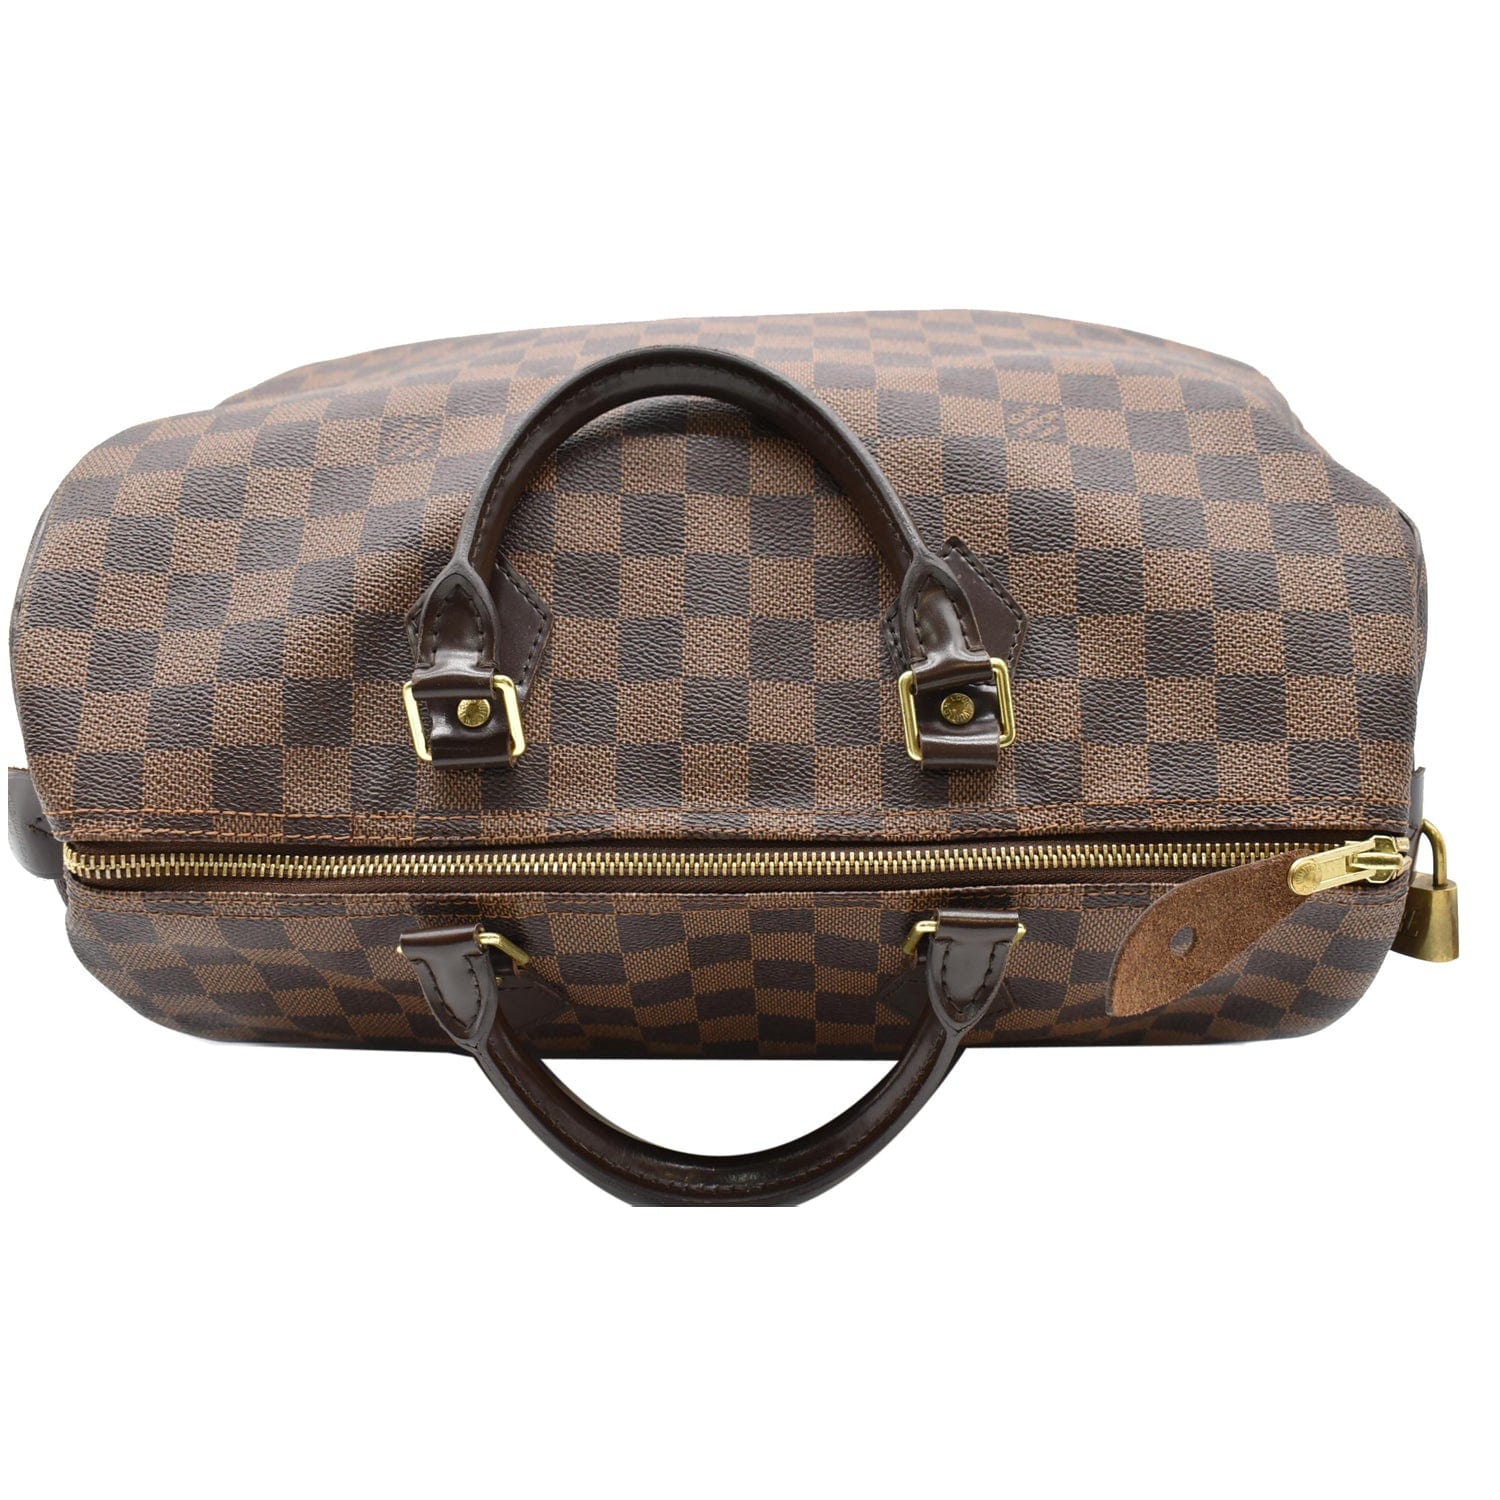 Louis Vuitton Speedy 35 Damier Ebene NM Handbag Purse (RI4193